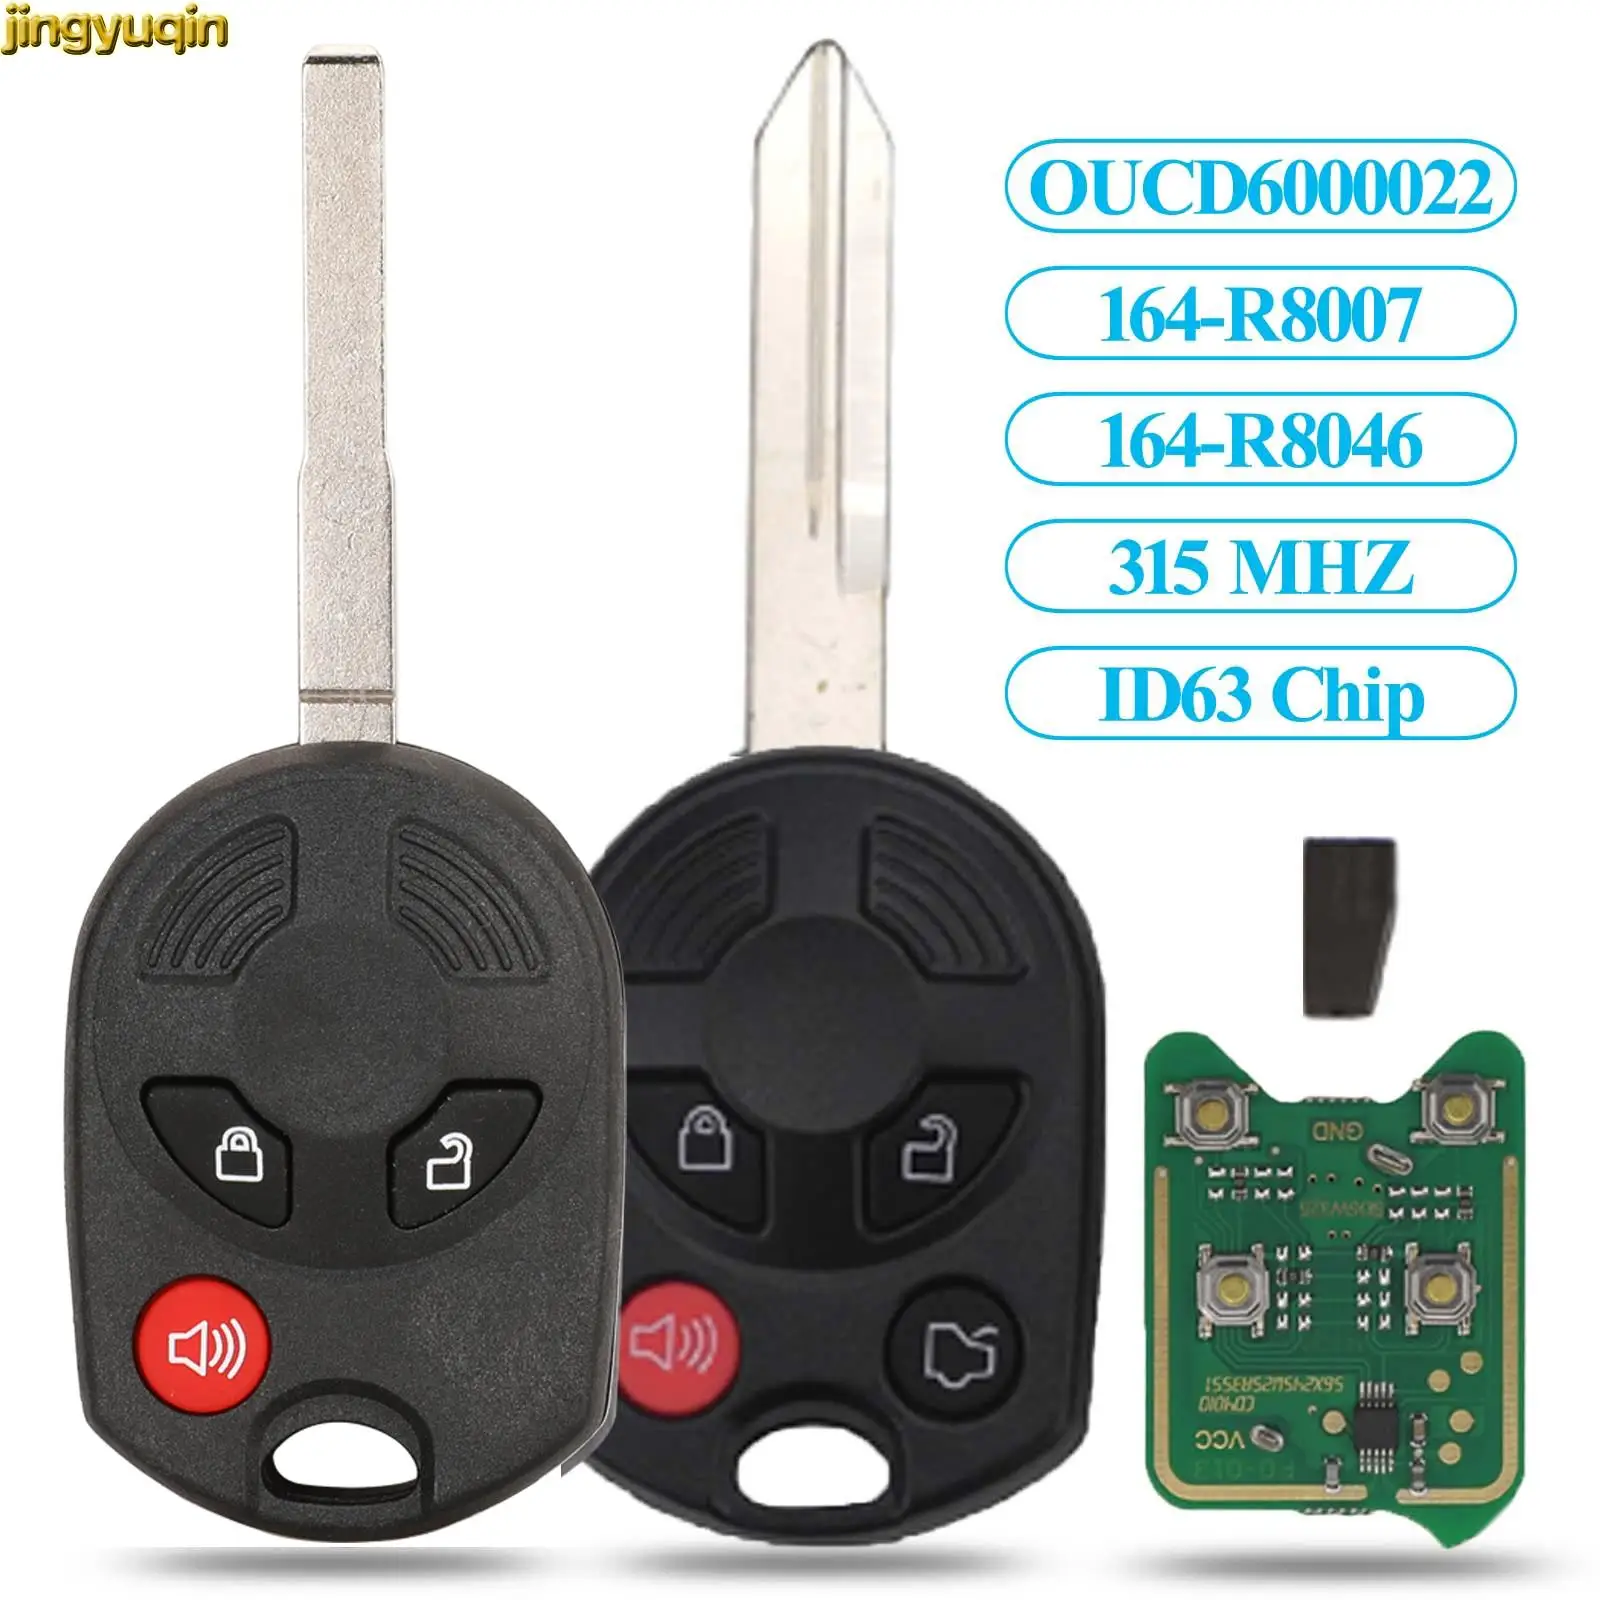 Jingyuqin 3/4B Car Key Remote Control 315/433MHZ ID63 80bit For Ford C-Max Edge Escape Focus Lincoln Mazda Mercury OUCD6000022